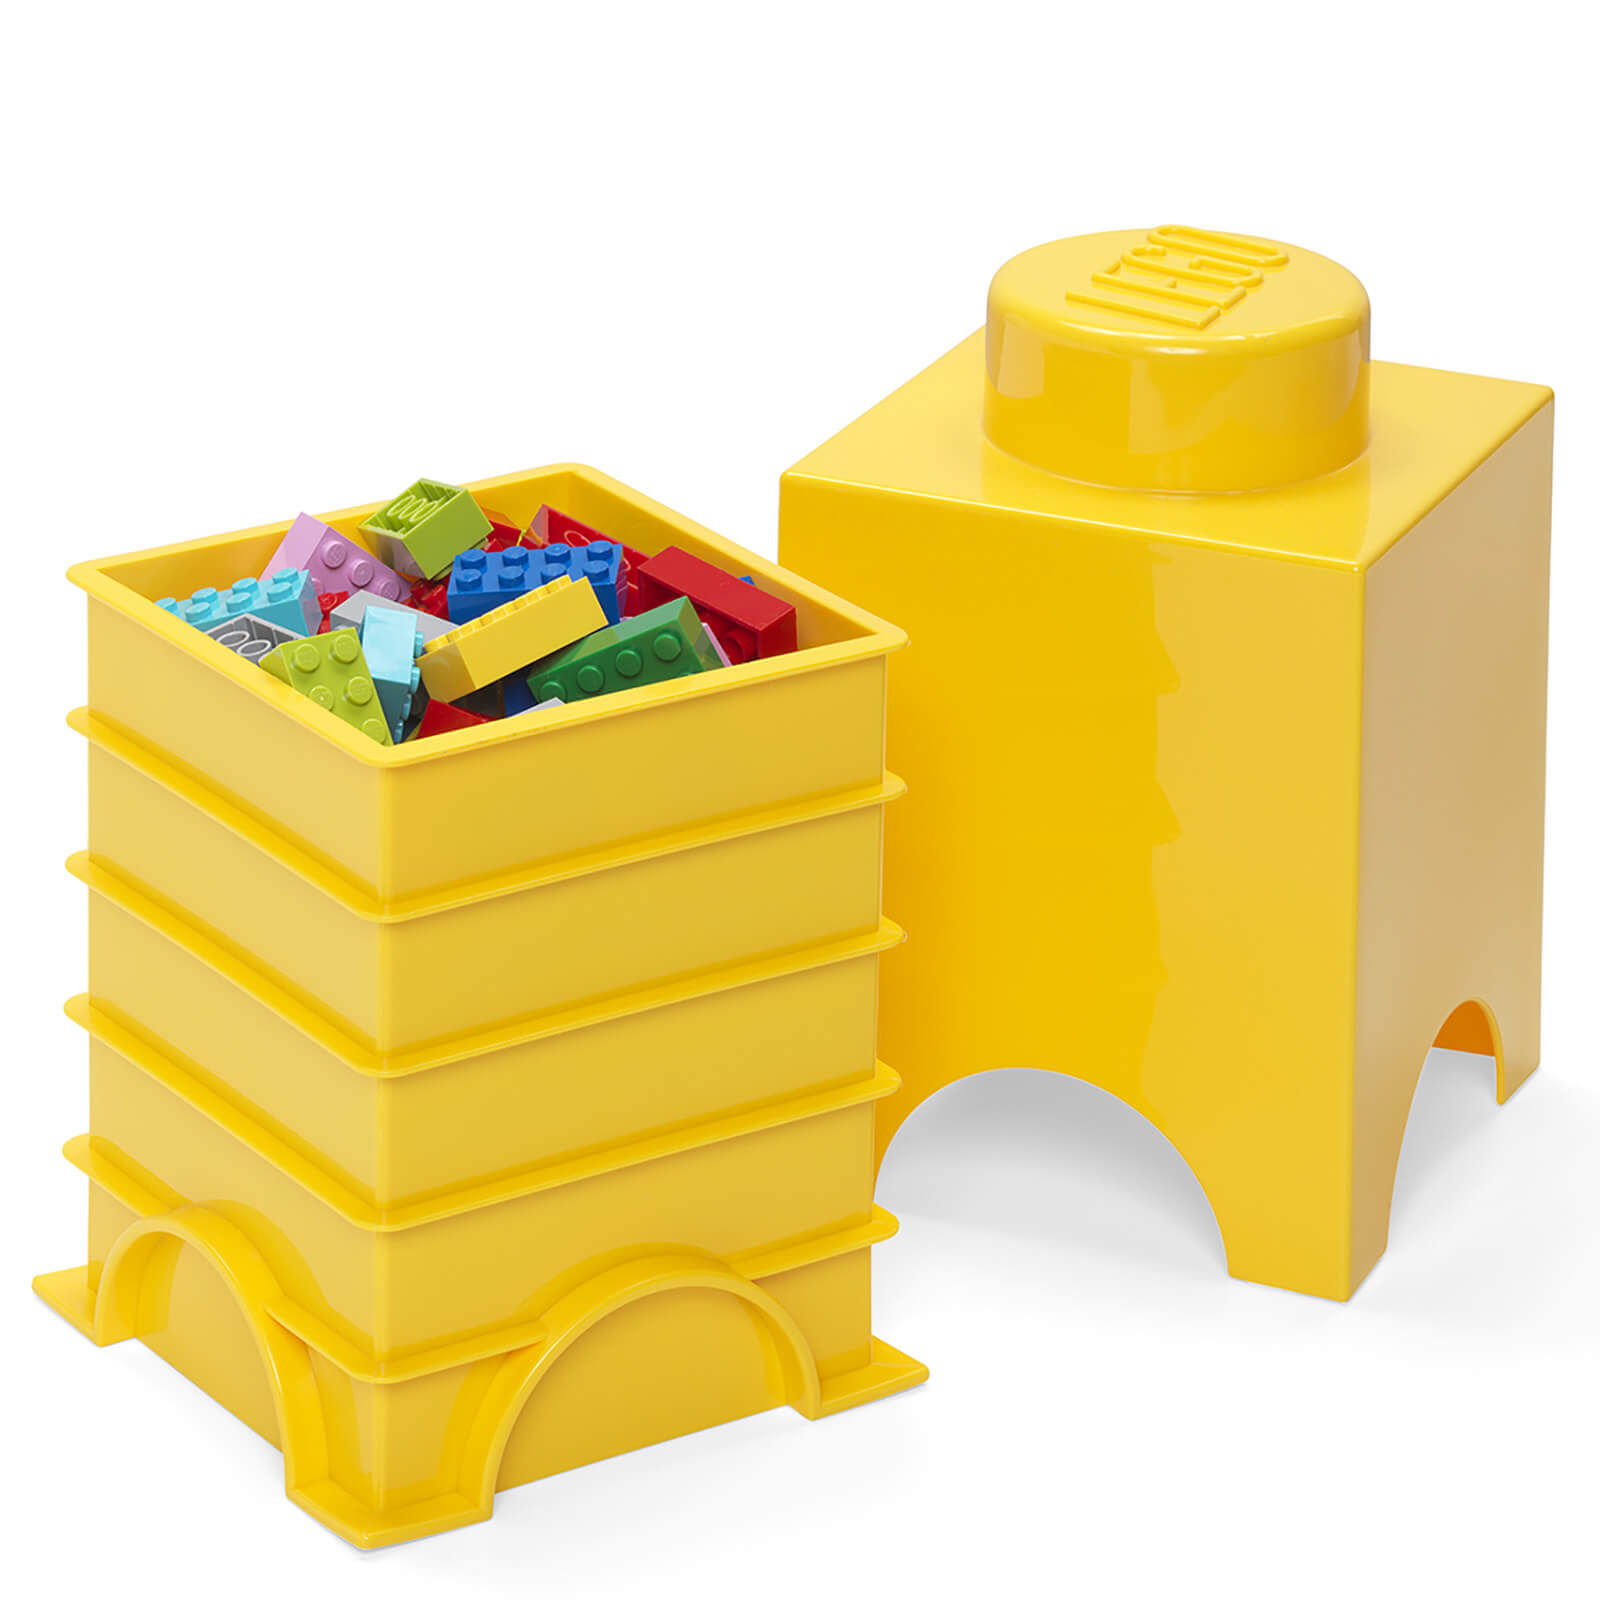 Lego 1 Stud Brick Container - Yellow